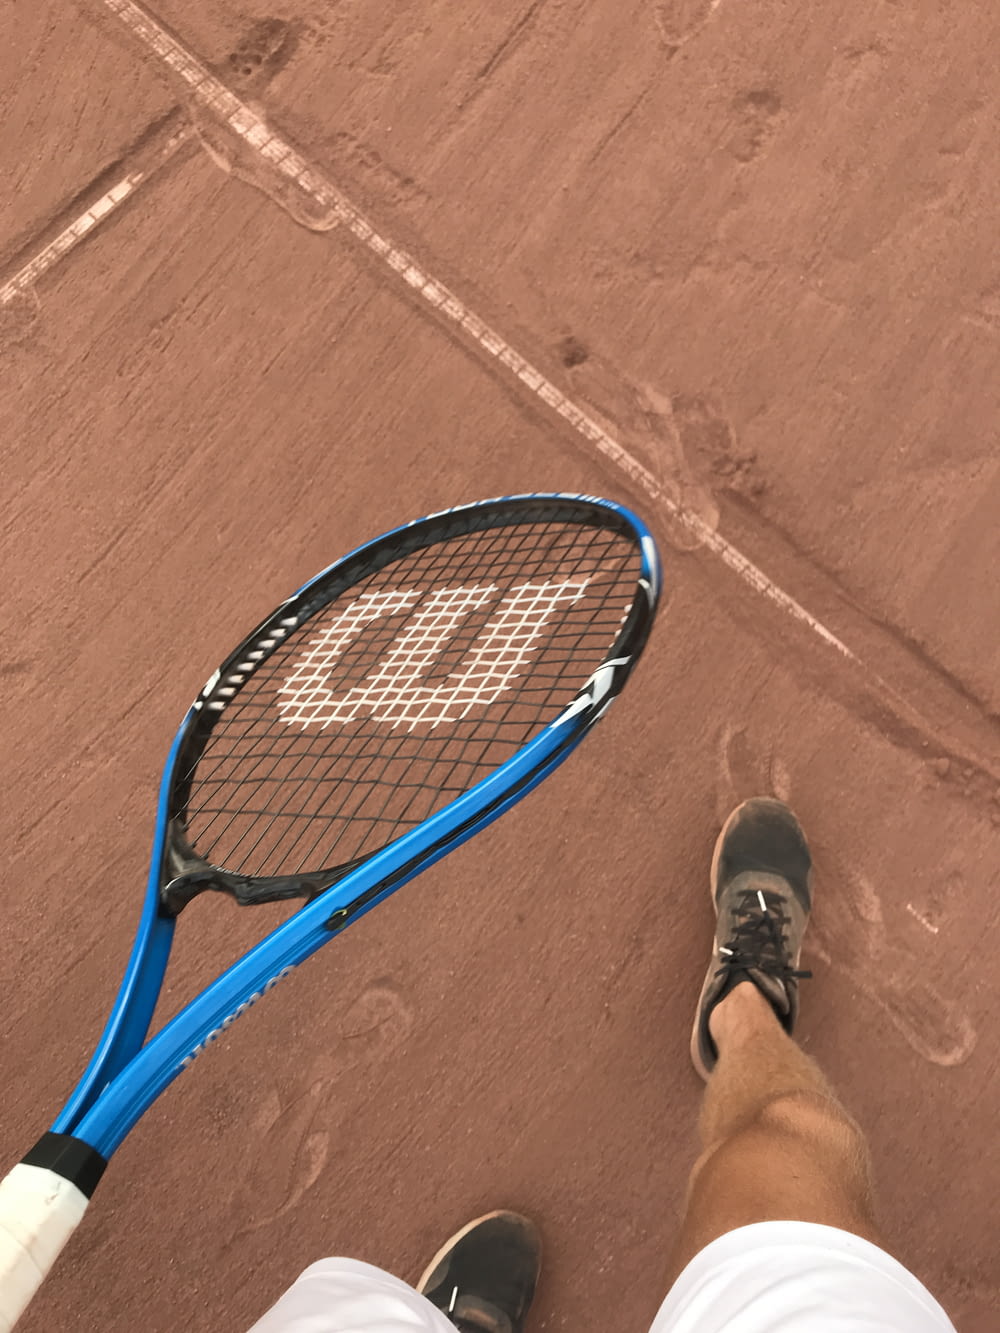 blue and black tennis racket on brown concrete floor